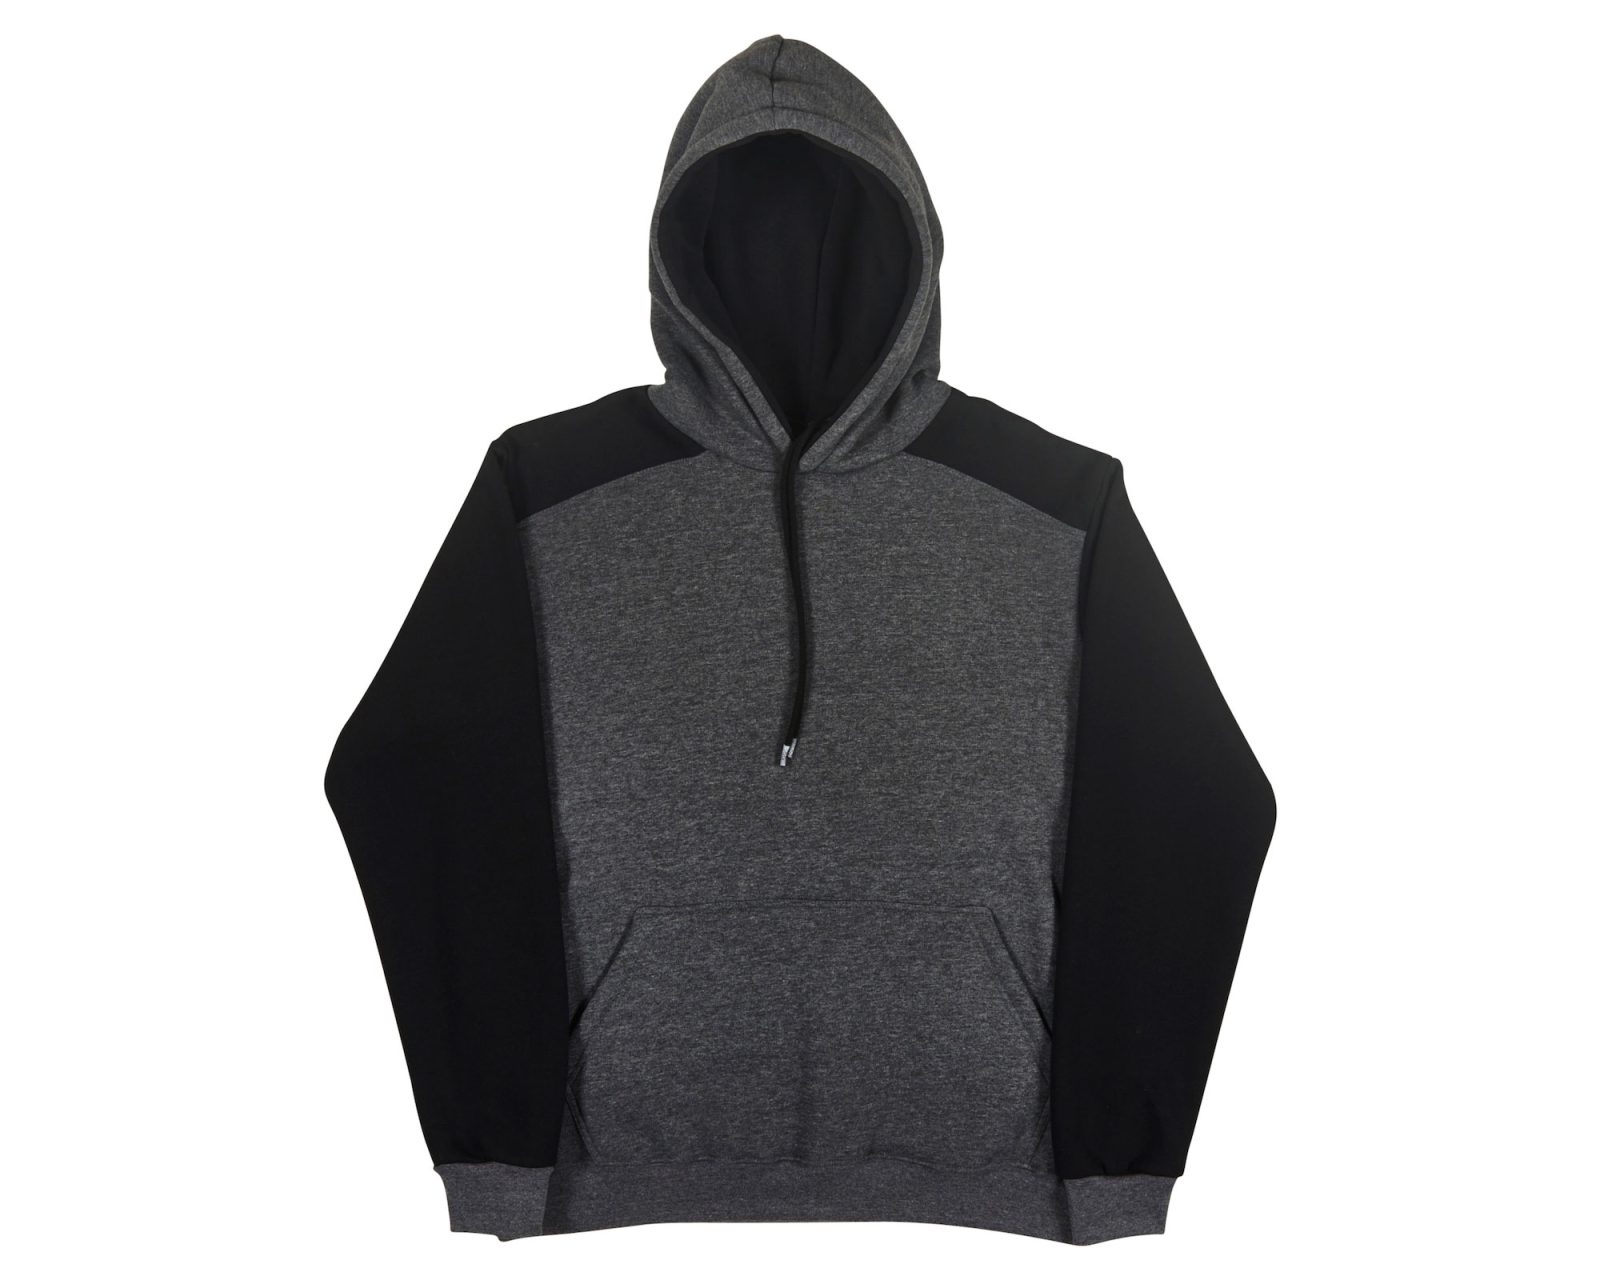 qualitops-mens-two-tone-hoodie-234-fl-234-charcoal-marle-black